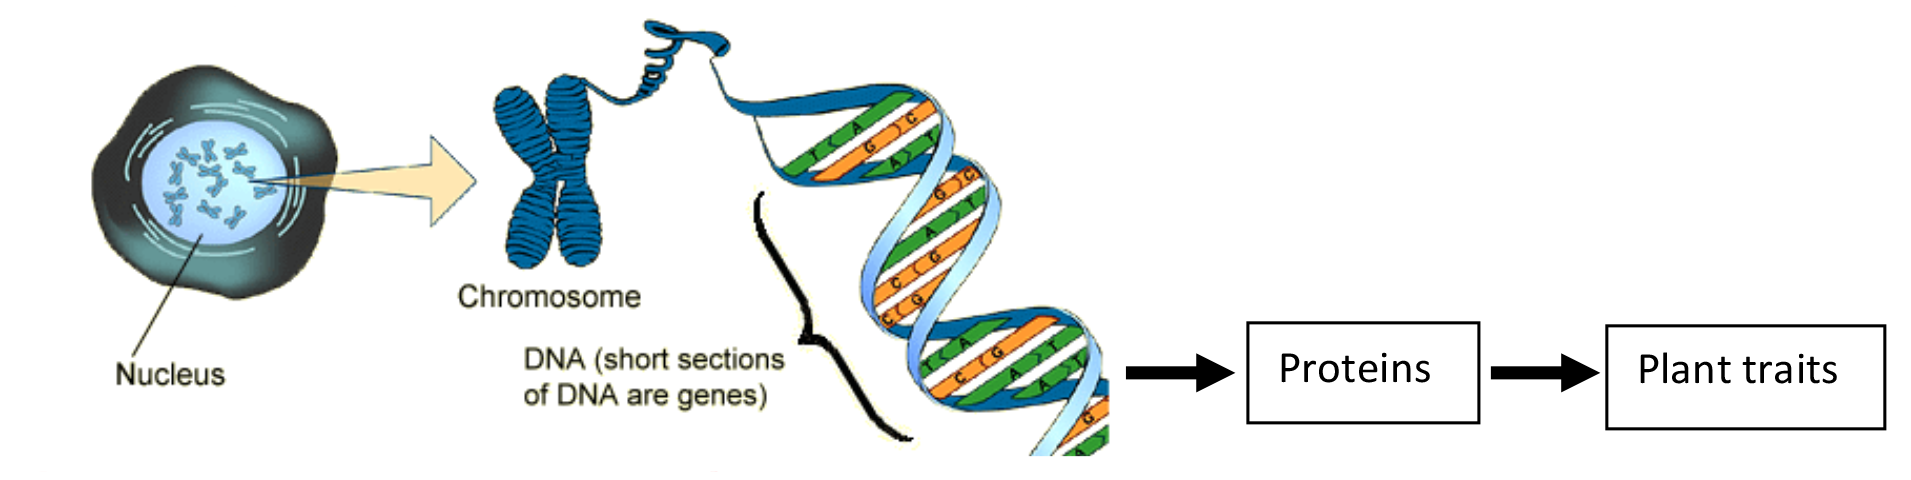 Dna clipart genetic trait. Agricultural curriculum matrix that